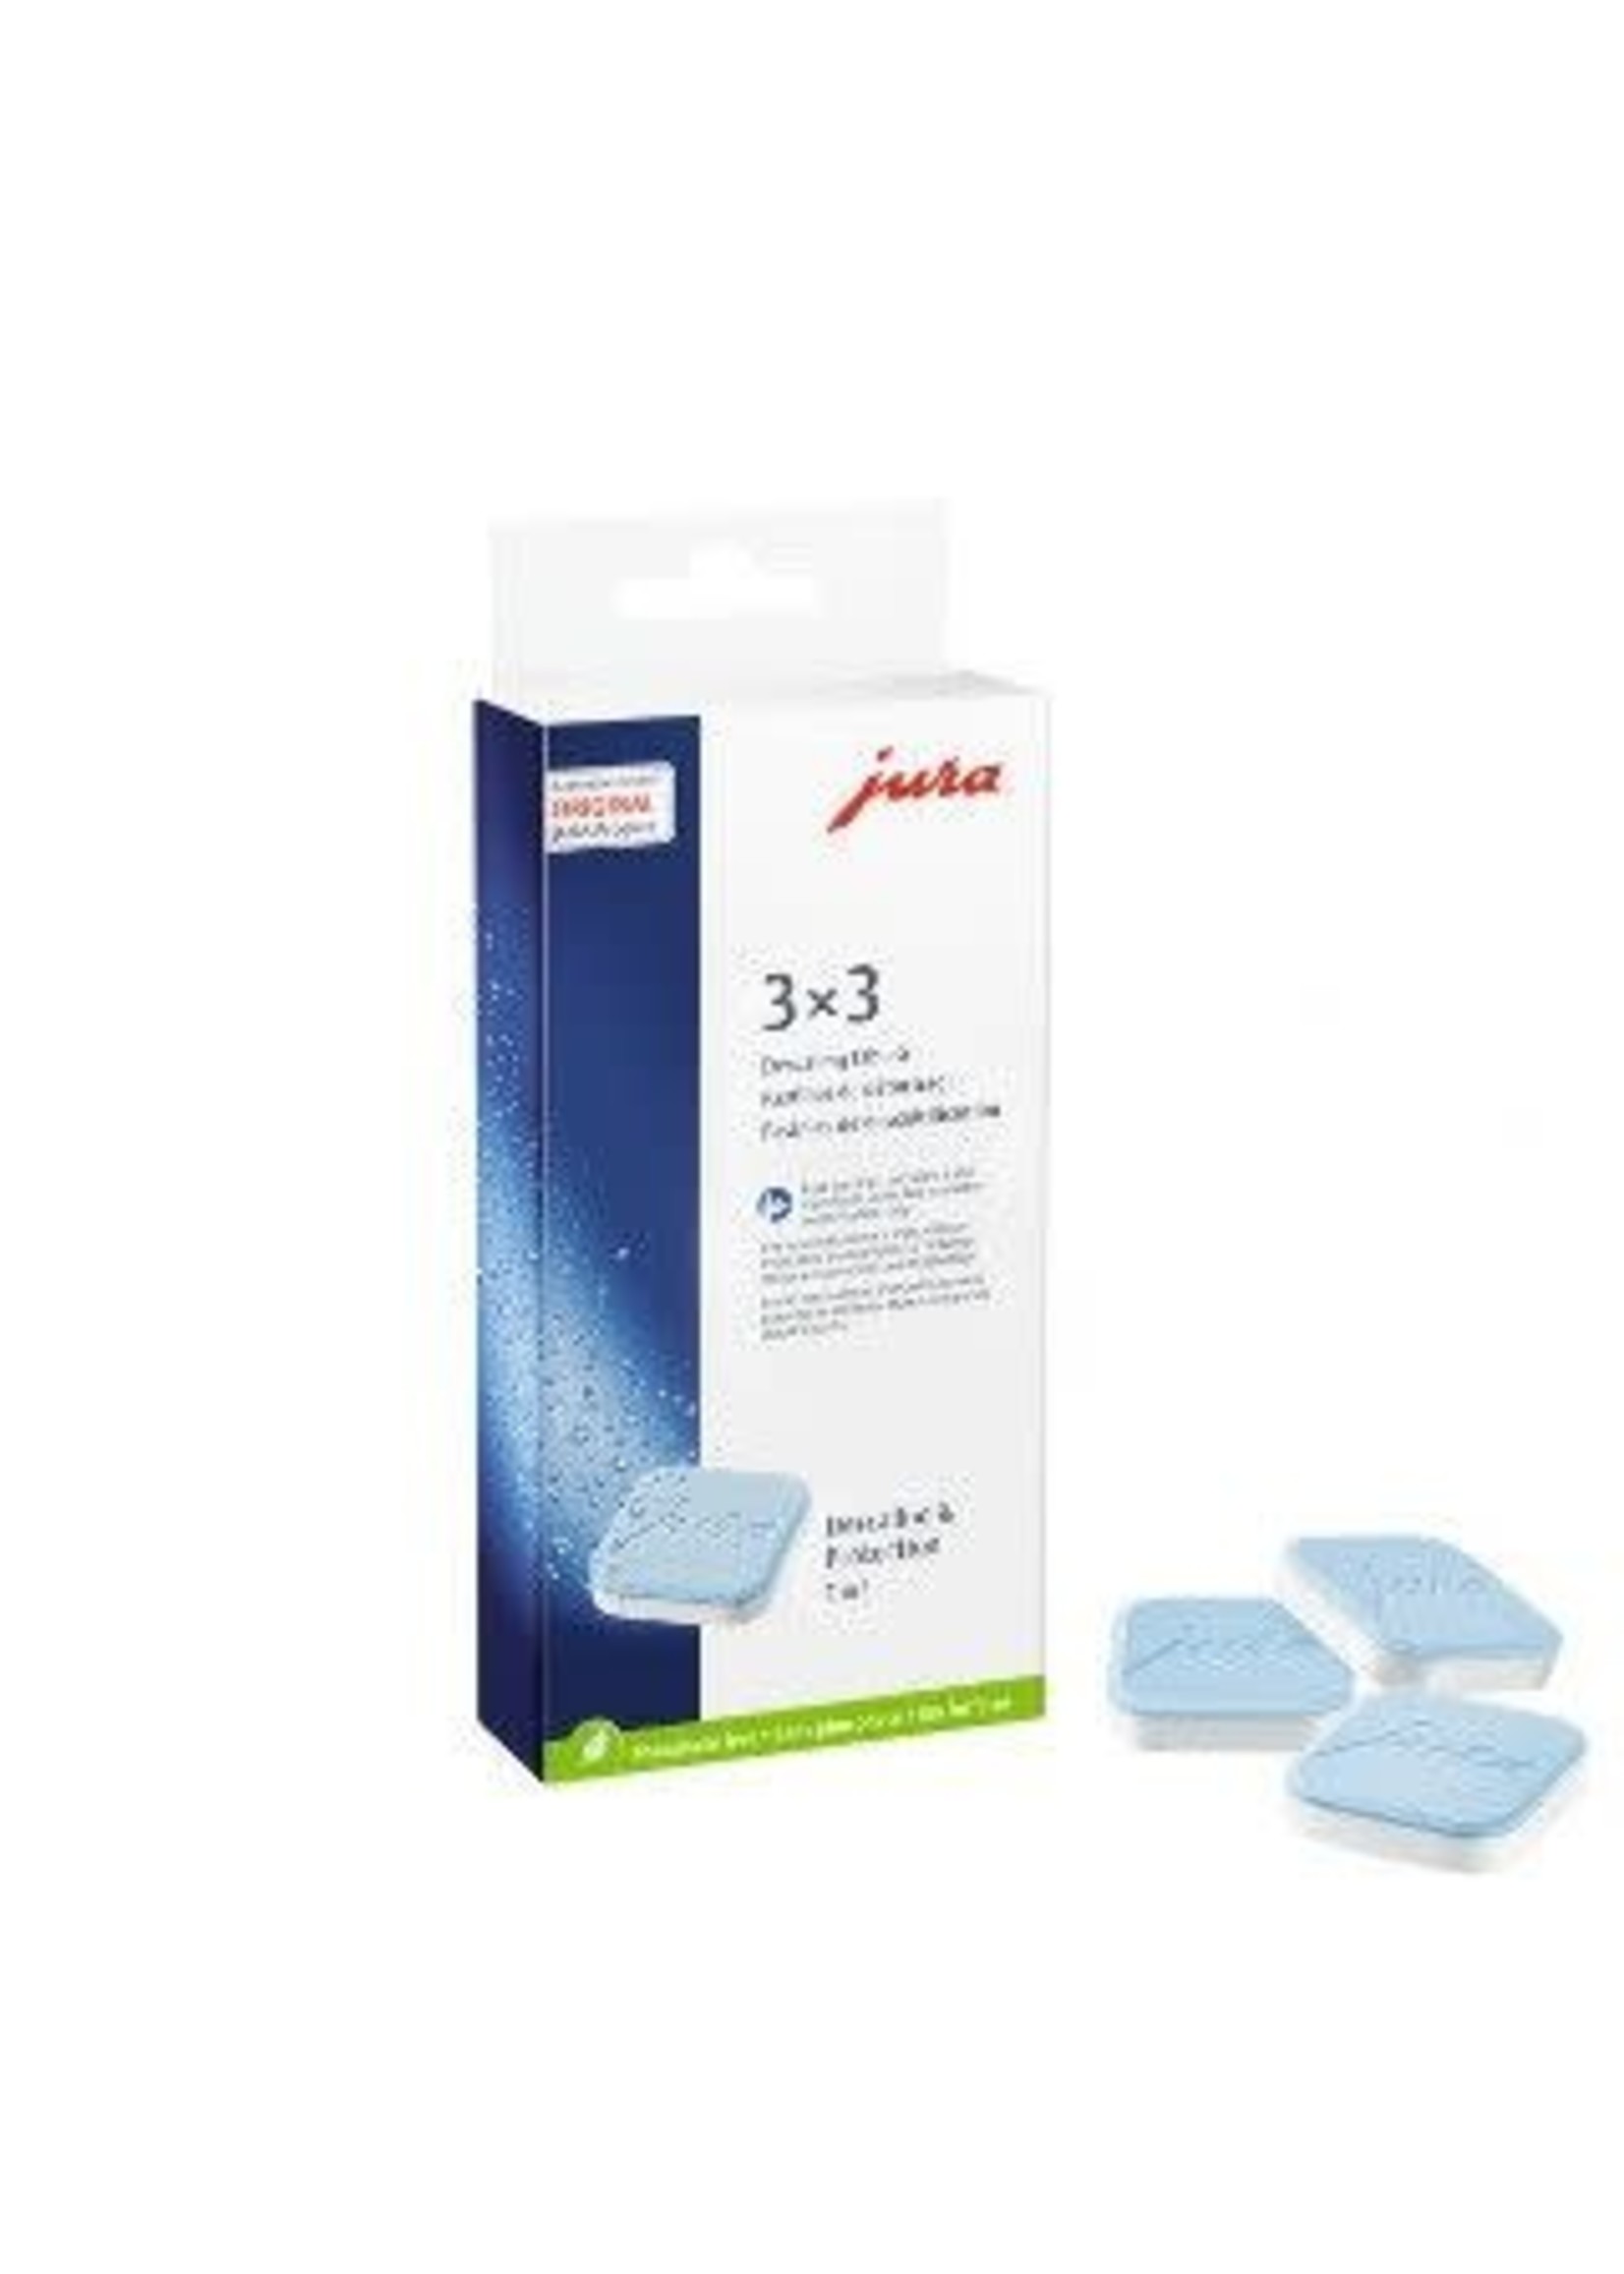 Jura 2-Phase Descaling Tablets 9pack